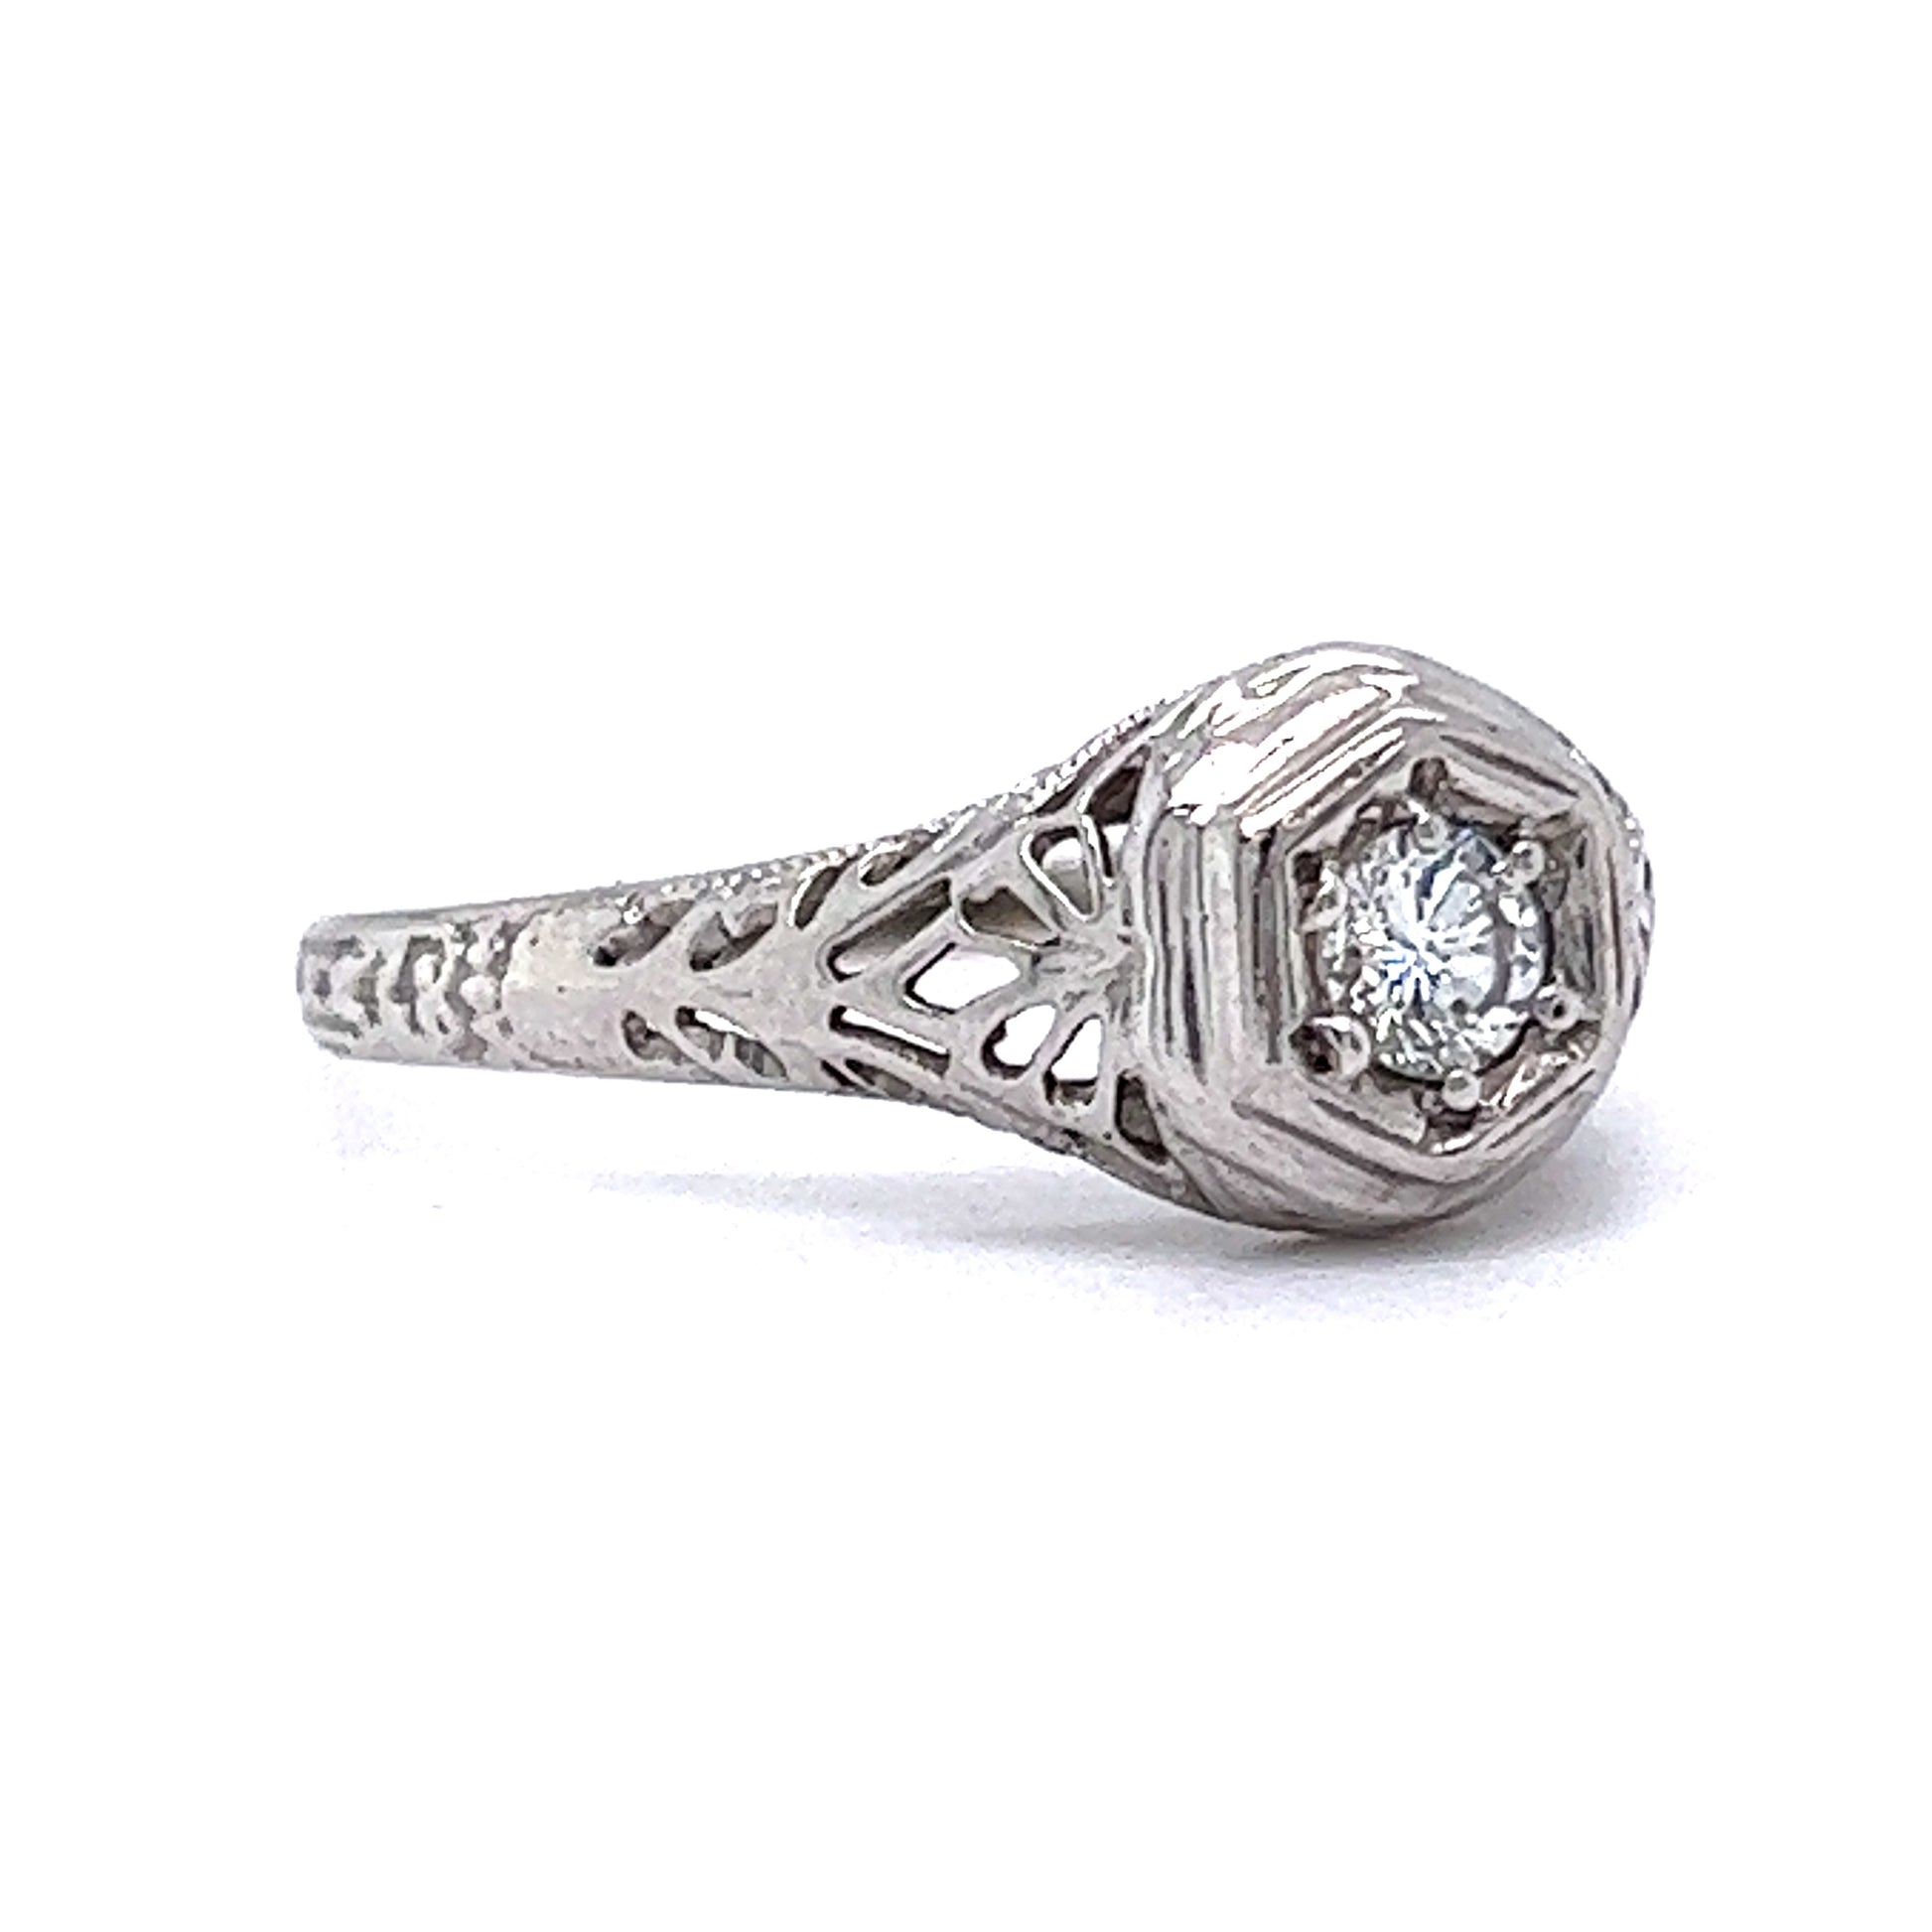 .19 Vintage Art Deco Diamond Engagement Ring in 18k White GoldComposition: 18 Karat White Gold Ring Size: 6.5 Total Diamond Weight: .19ct Total Gram Weight: 1.63 g Inscription: 18k
      